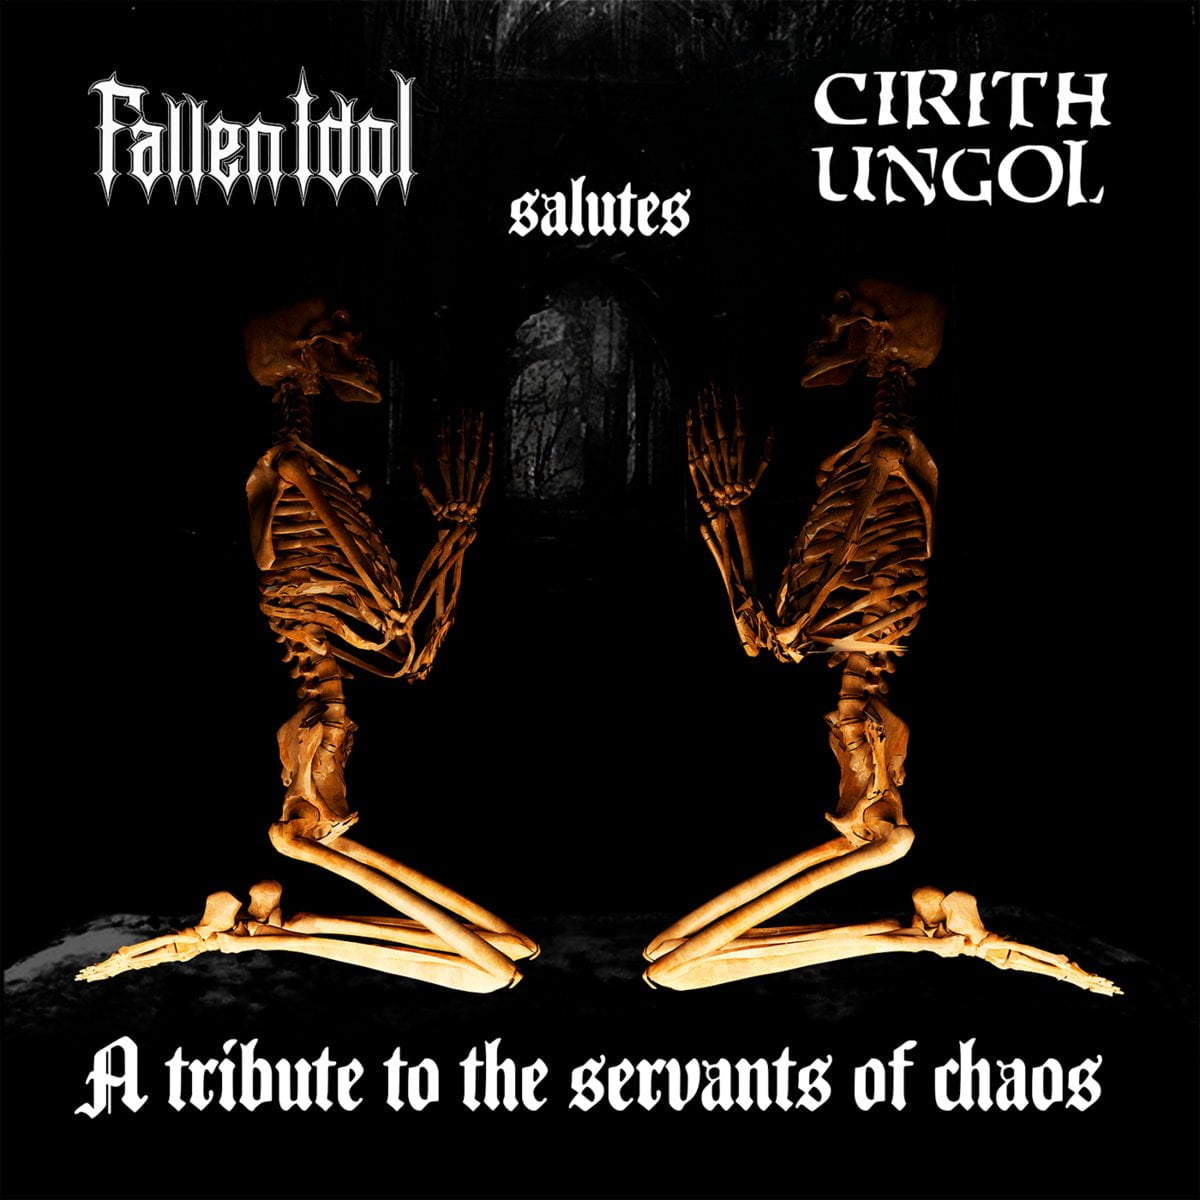 fallen-idol-salutes-cirith-ungol-a-tribute-to-the-servants-of-chaos Fallen Idols  